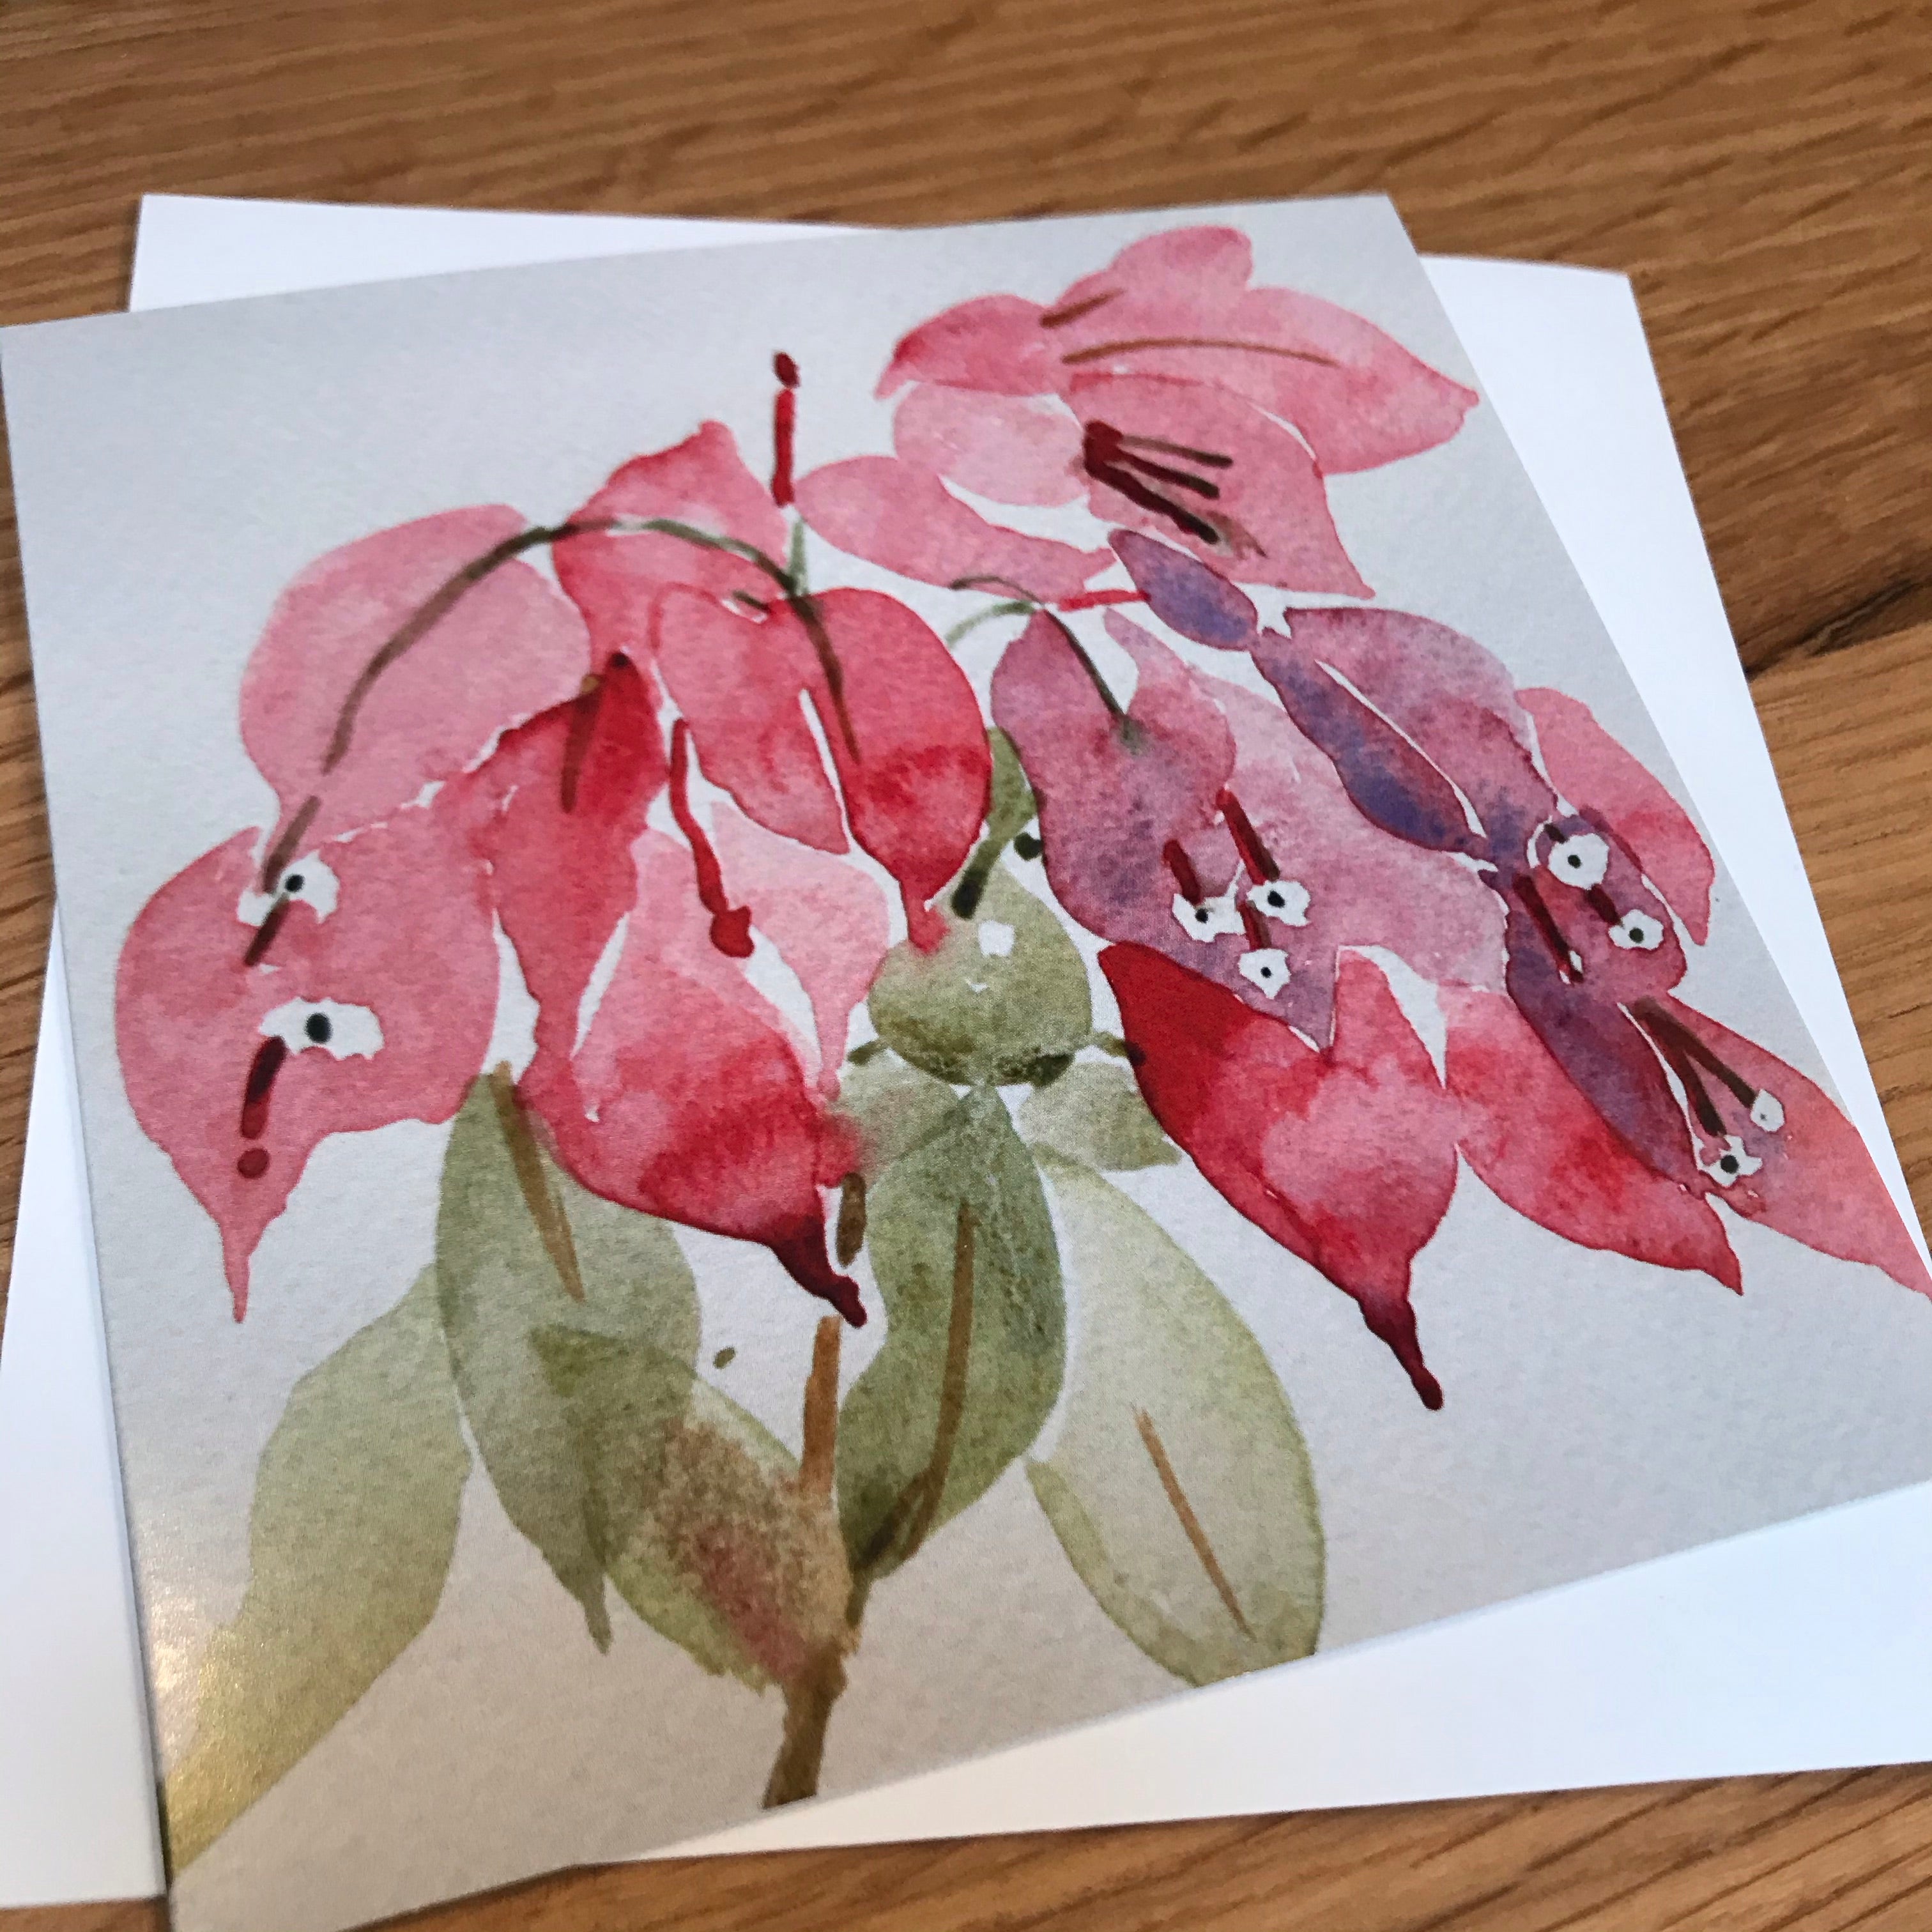 Bougainvillea Flower Card - The Nancy Smillie Shop - Art, Jewellery & Designer Gifts Glasgow